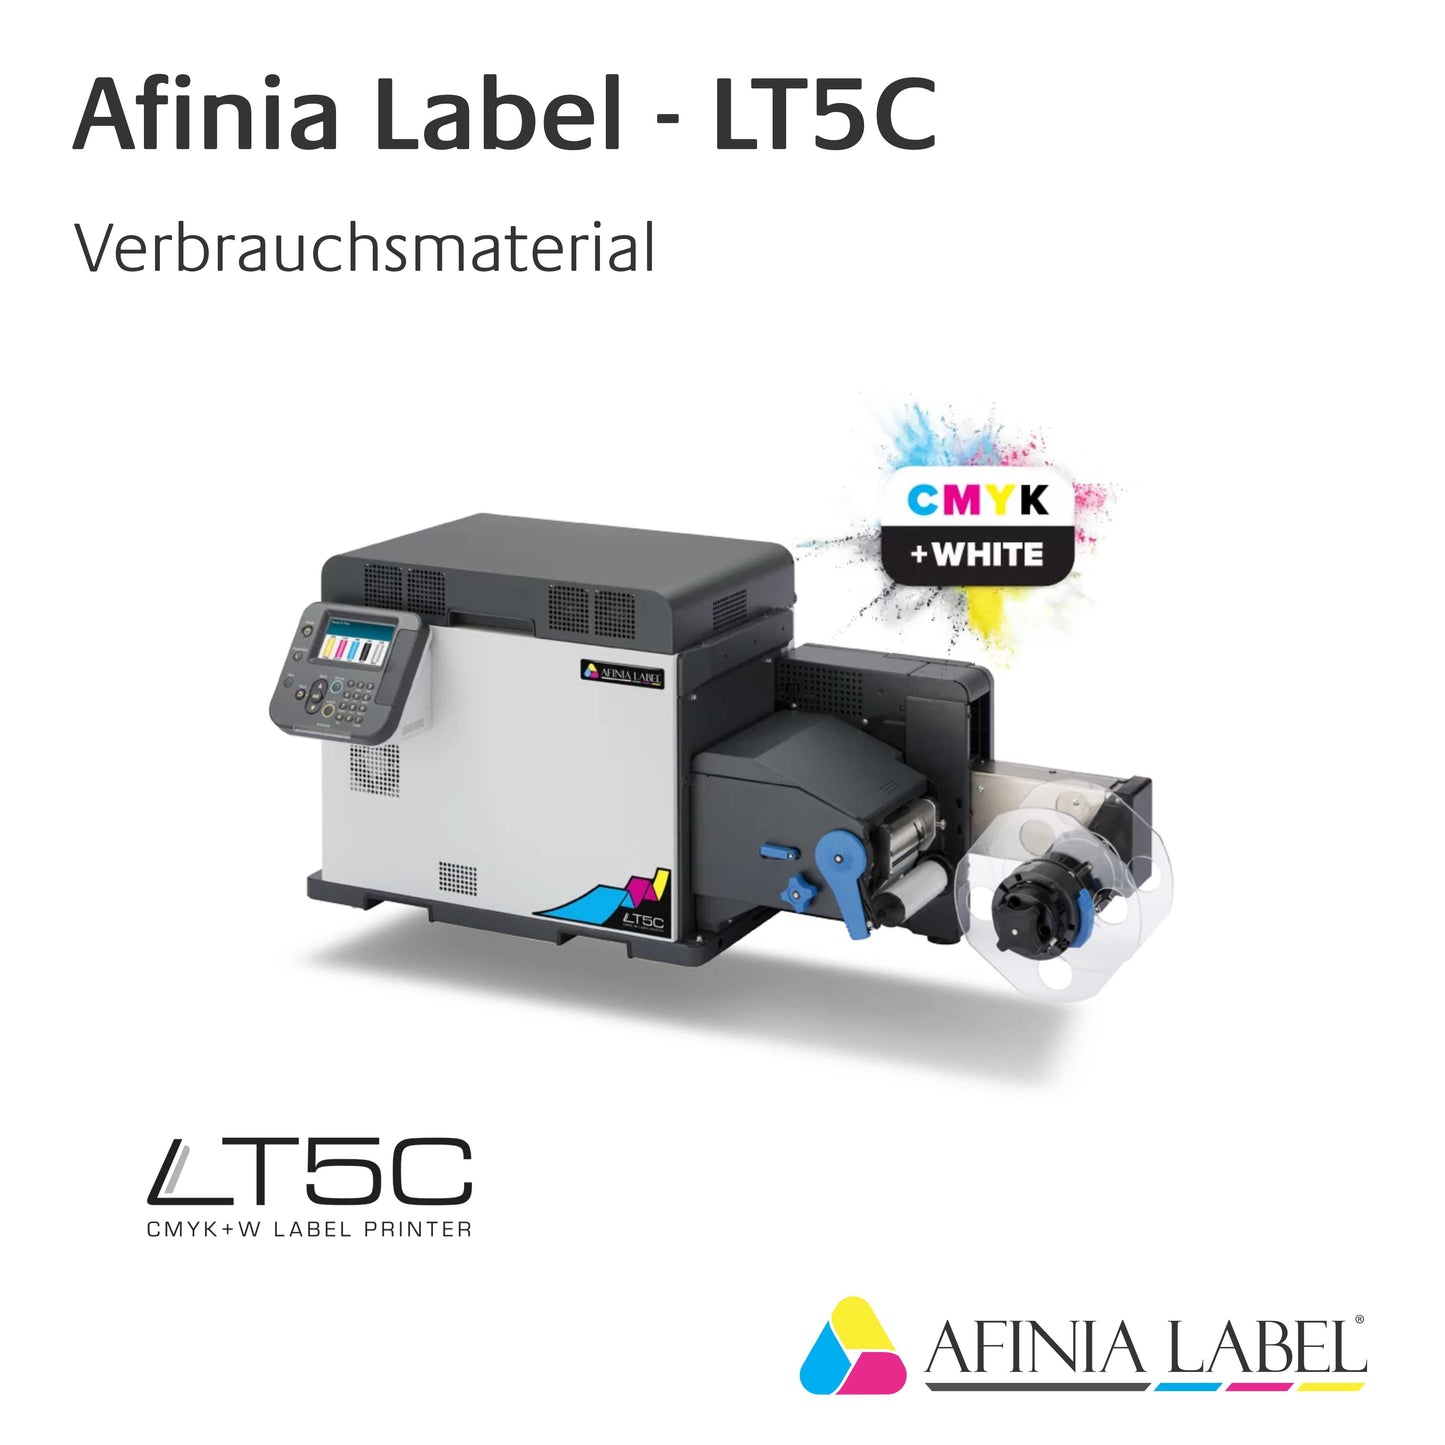 Afinia Label LT5C - Toner / Trommel - Cyan